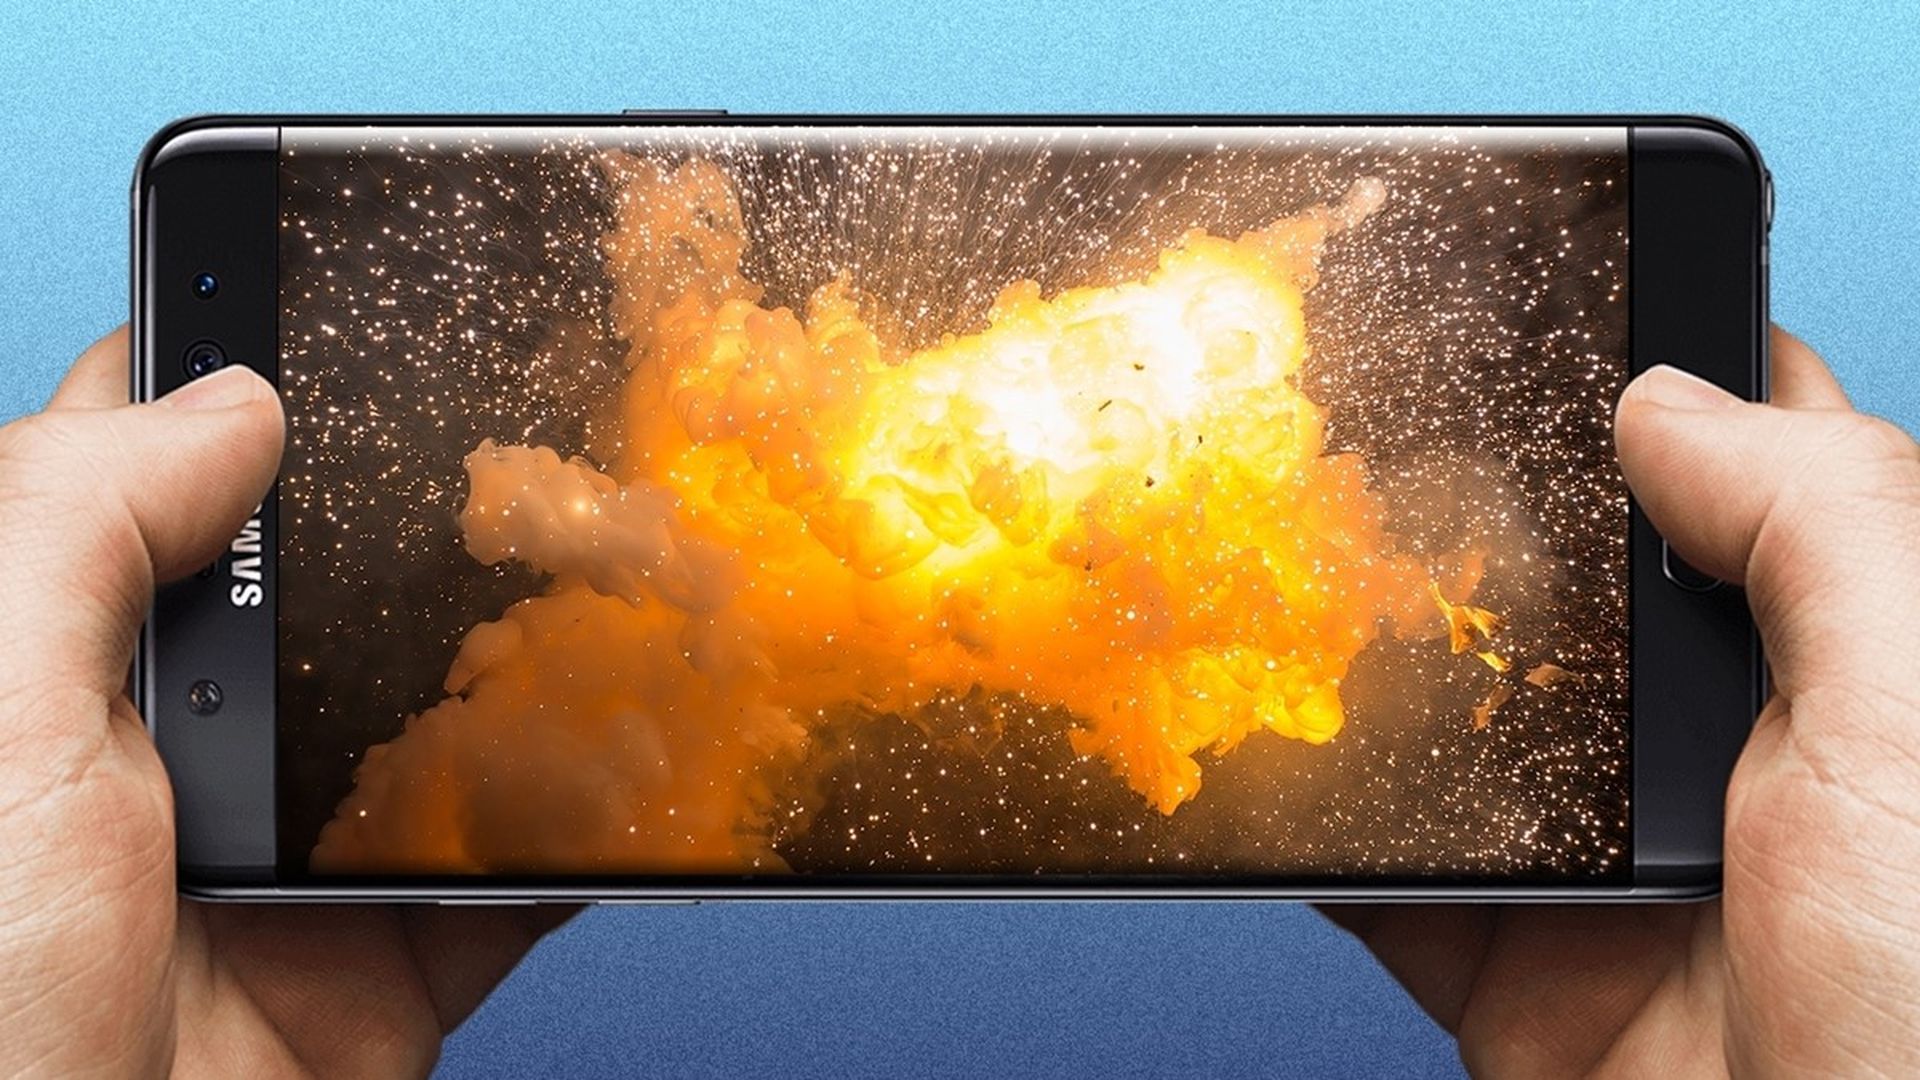 Samsung Galaxy Note 7 exploding. Samsung Note 7 взрывается. Samsung Galaxy Note 7 Fe. Самсунг взорвался.